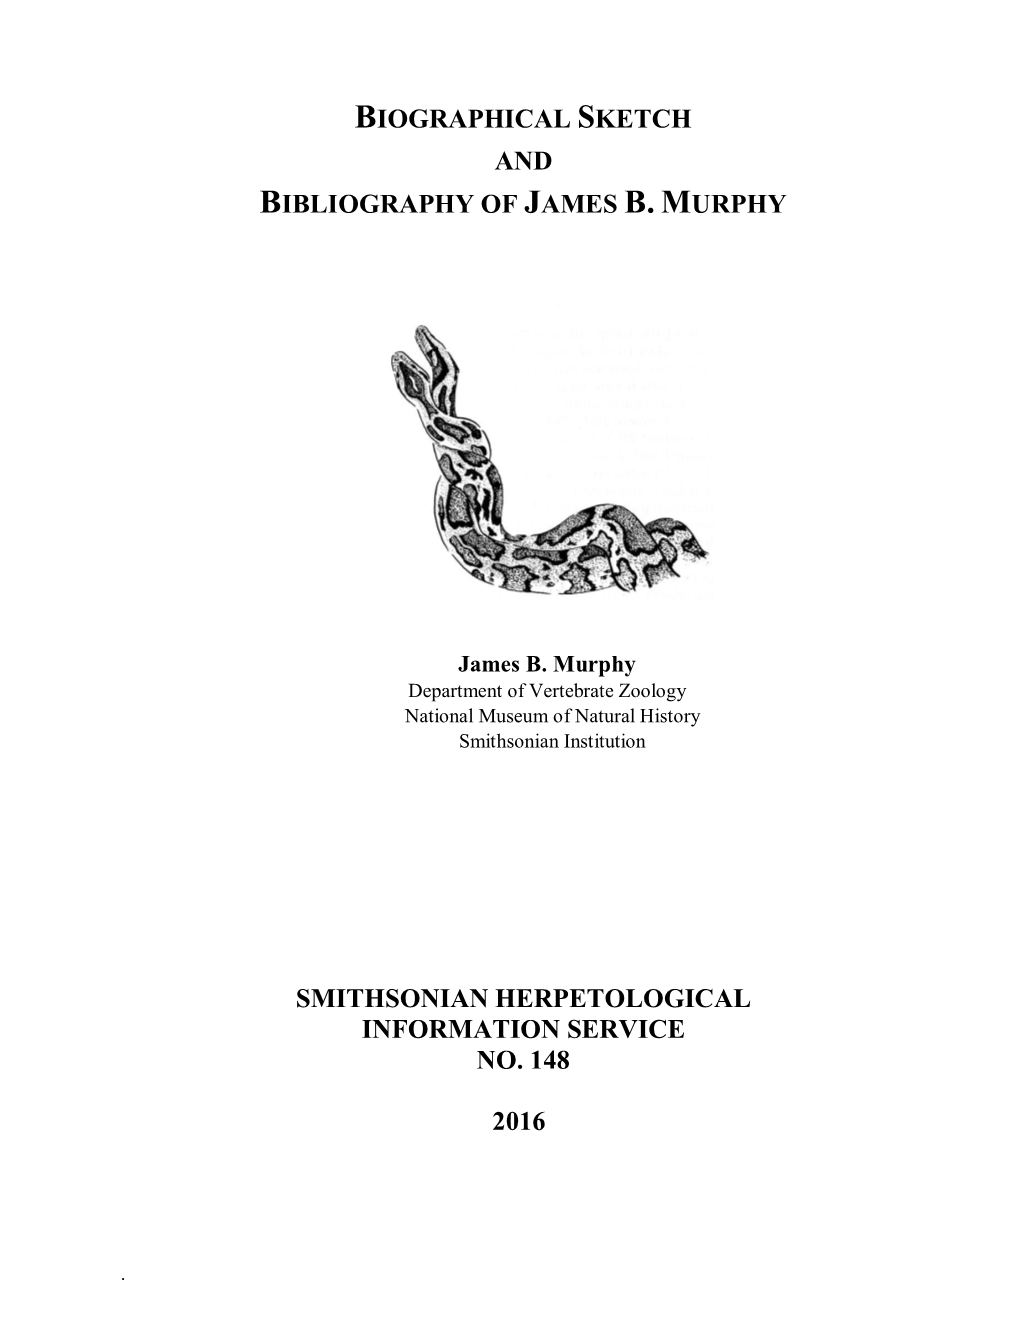 Bibliography of James B. Murphy